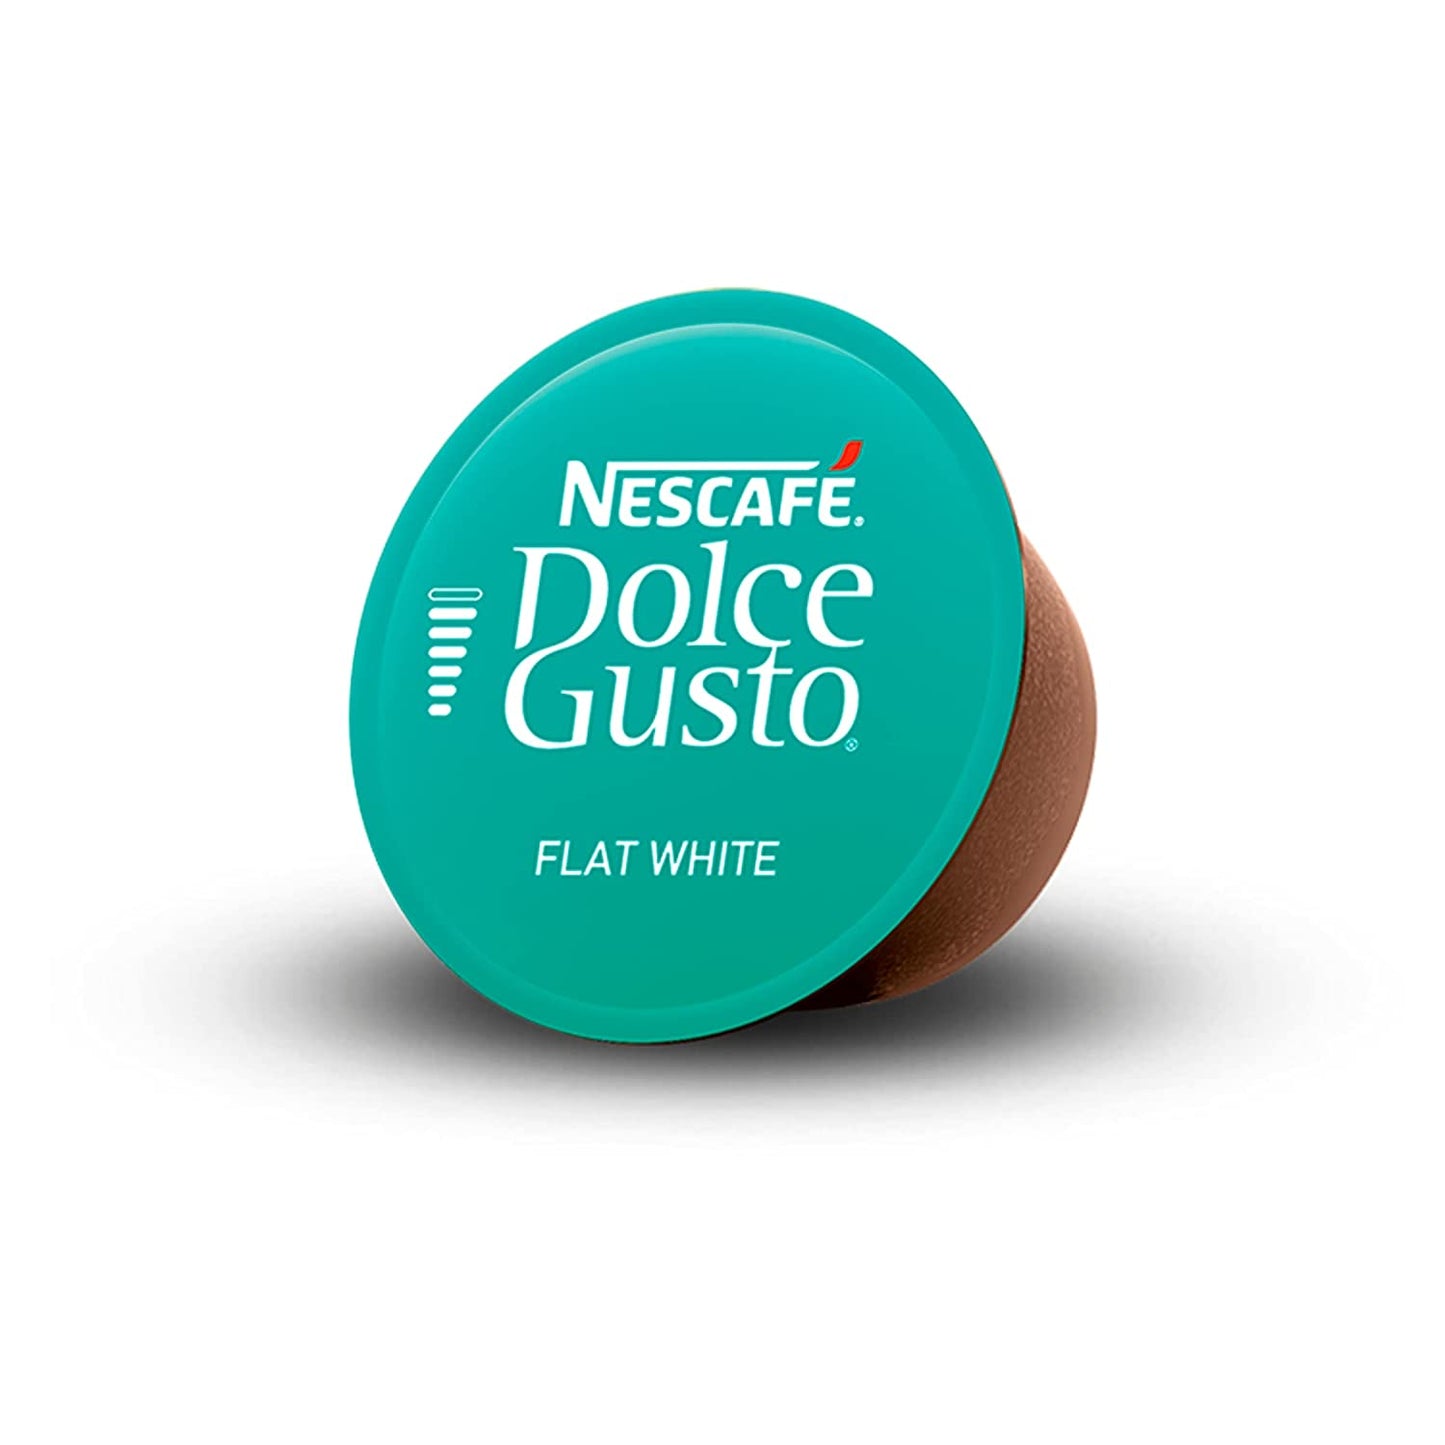 Nescafe Dolce Gusto Flat White -16 Capsules